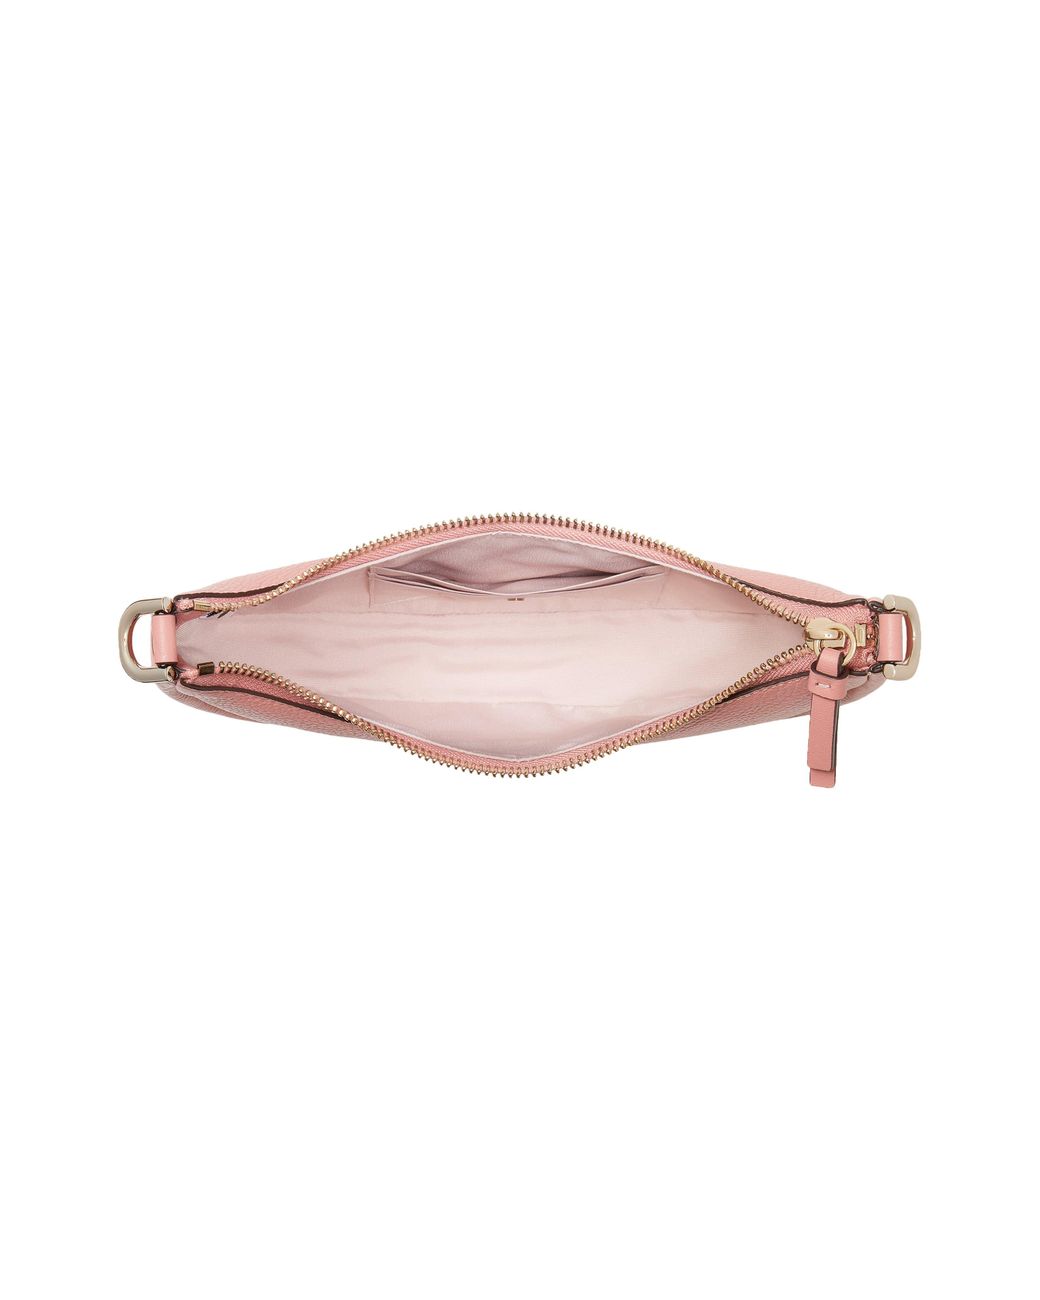 Kate Spade New York Smile Pebbled Leather Small Crossbody Bag - Serene Pink